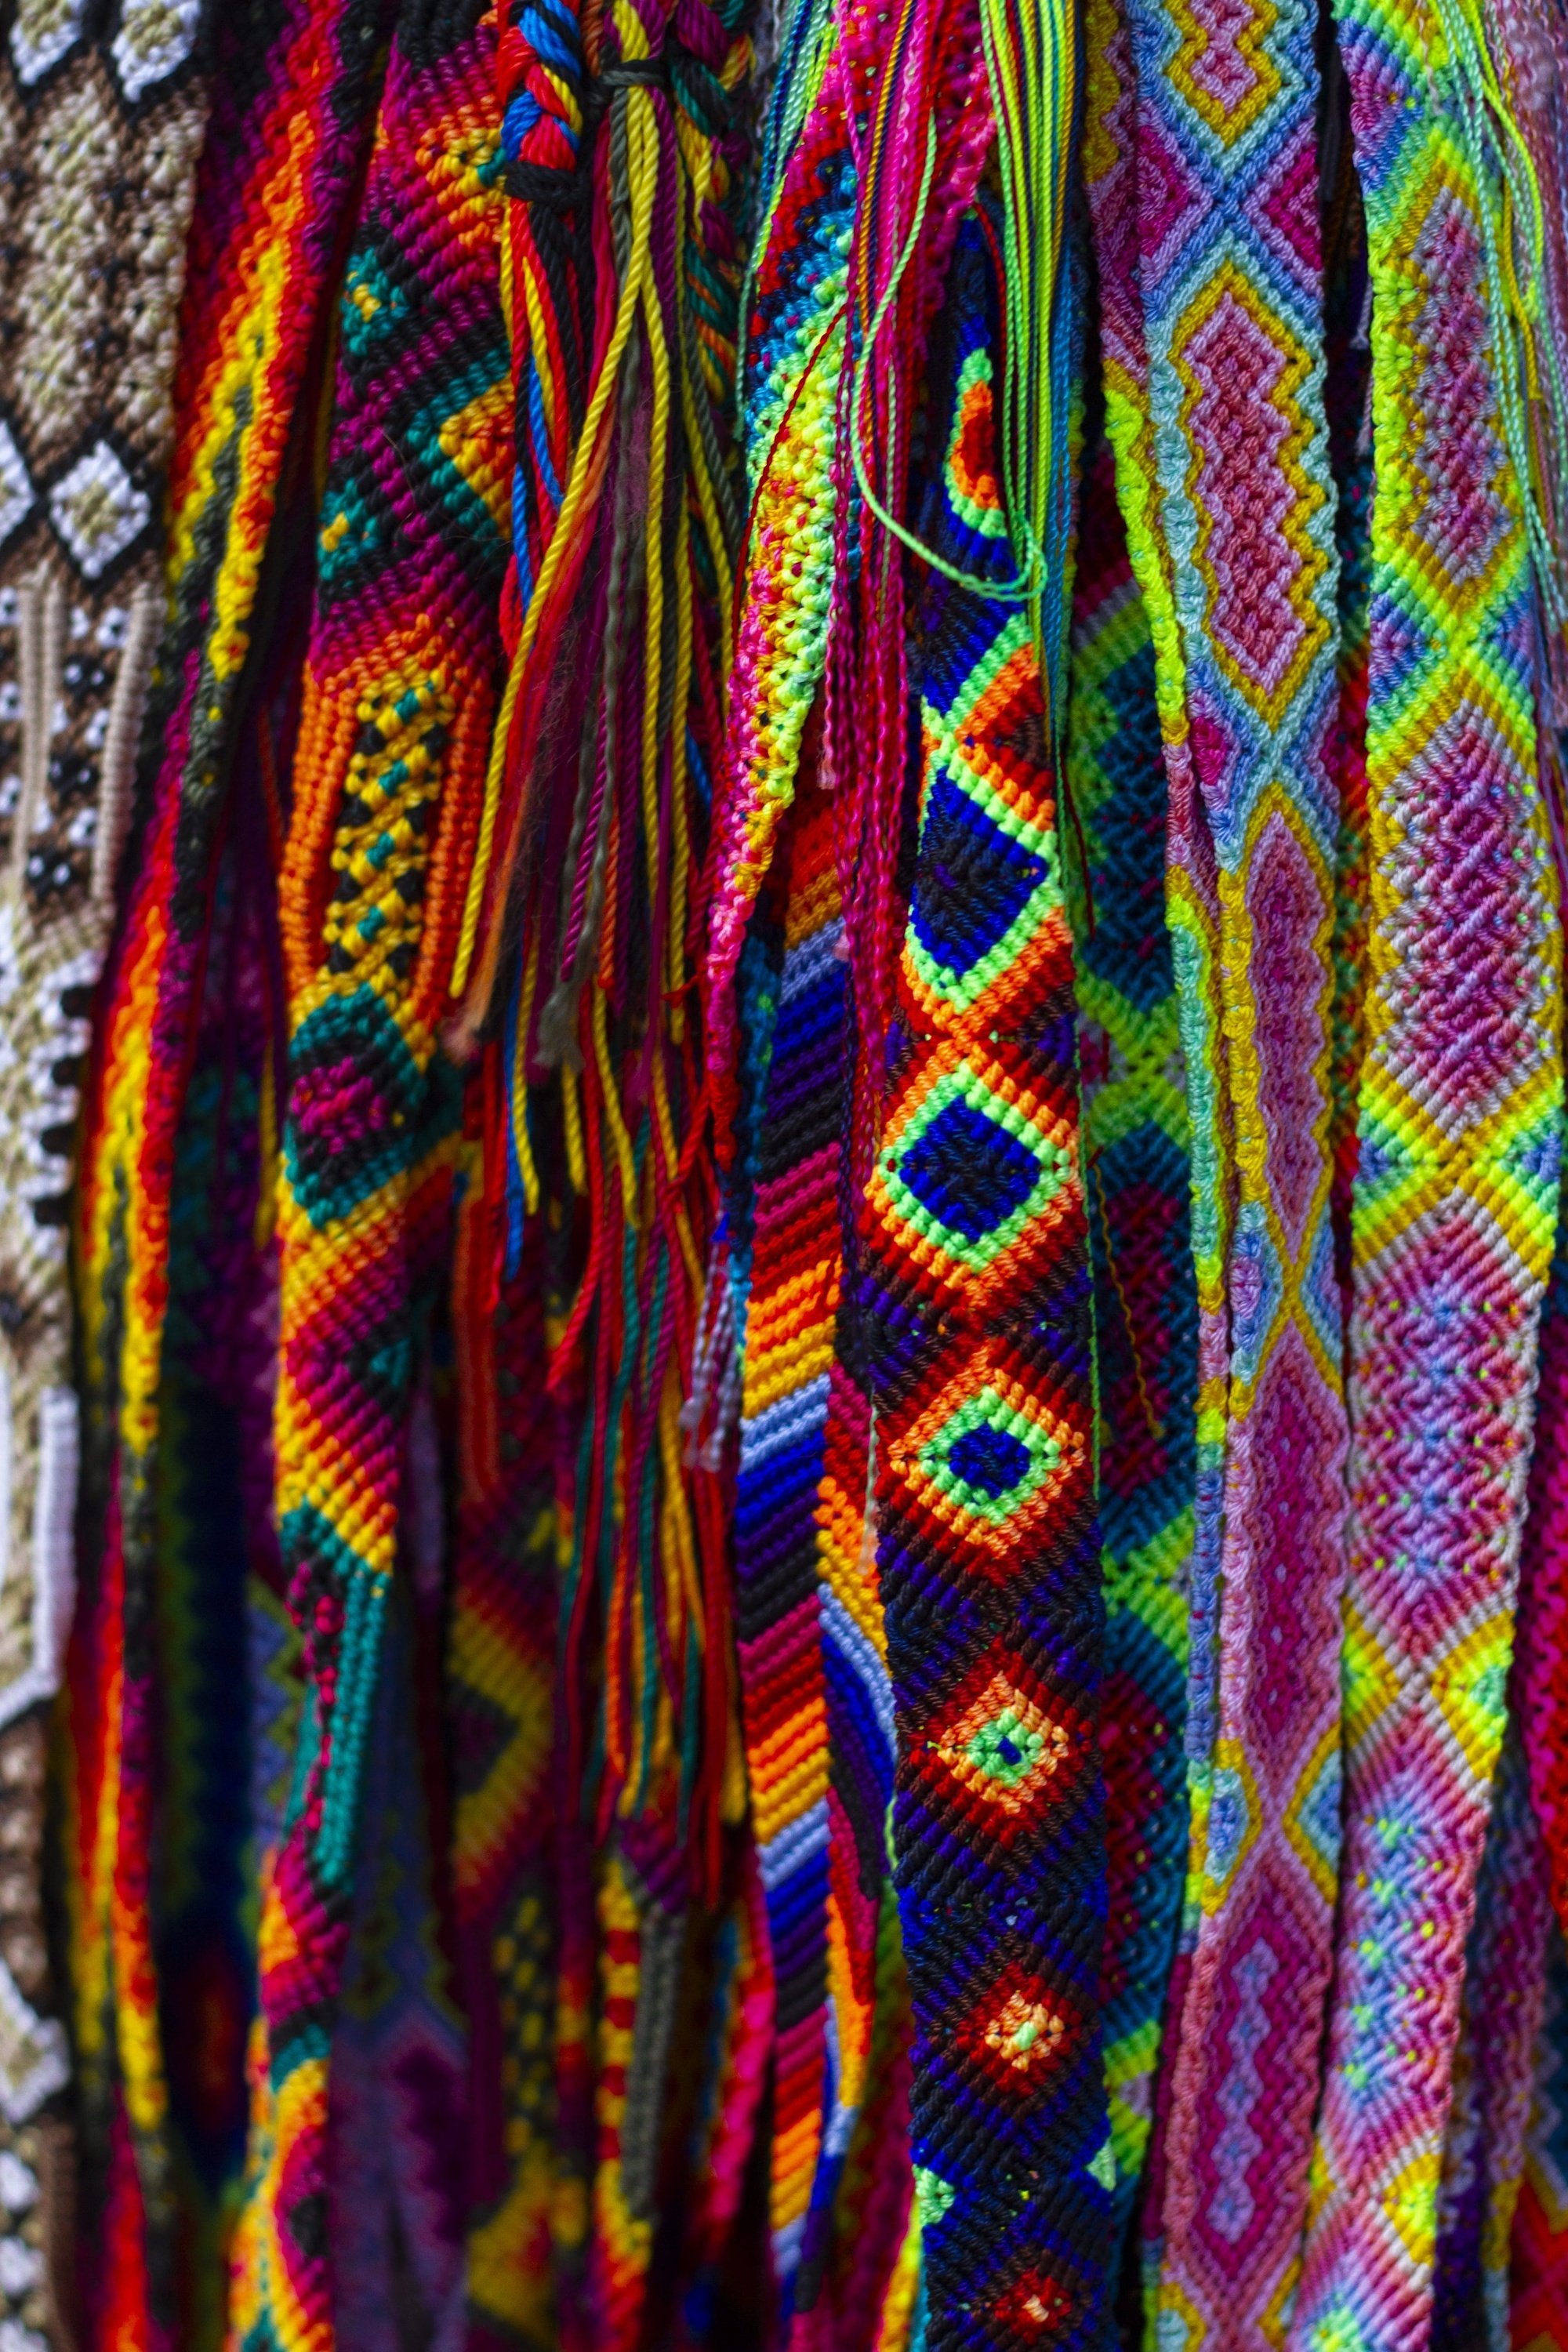 Image of colorful handmade Mayan textiles